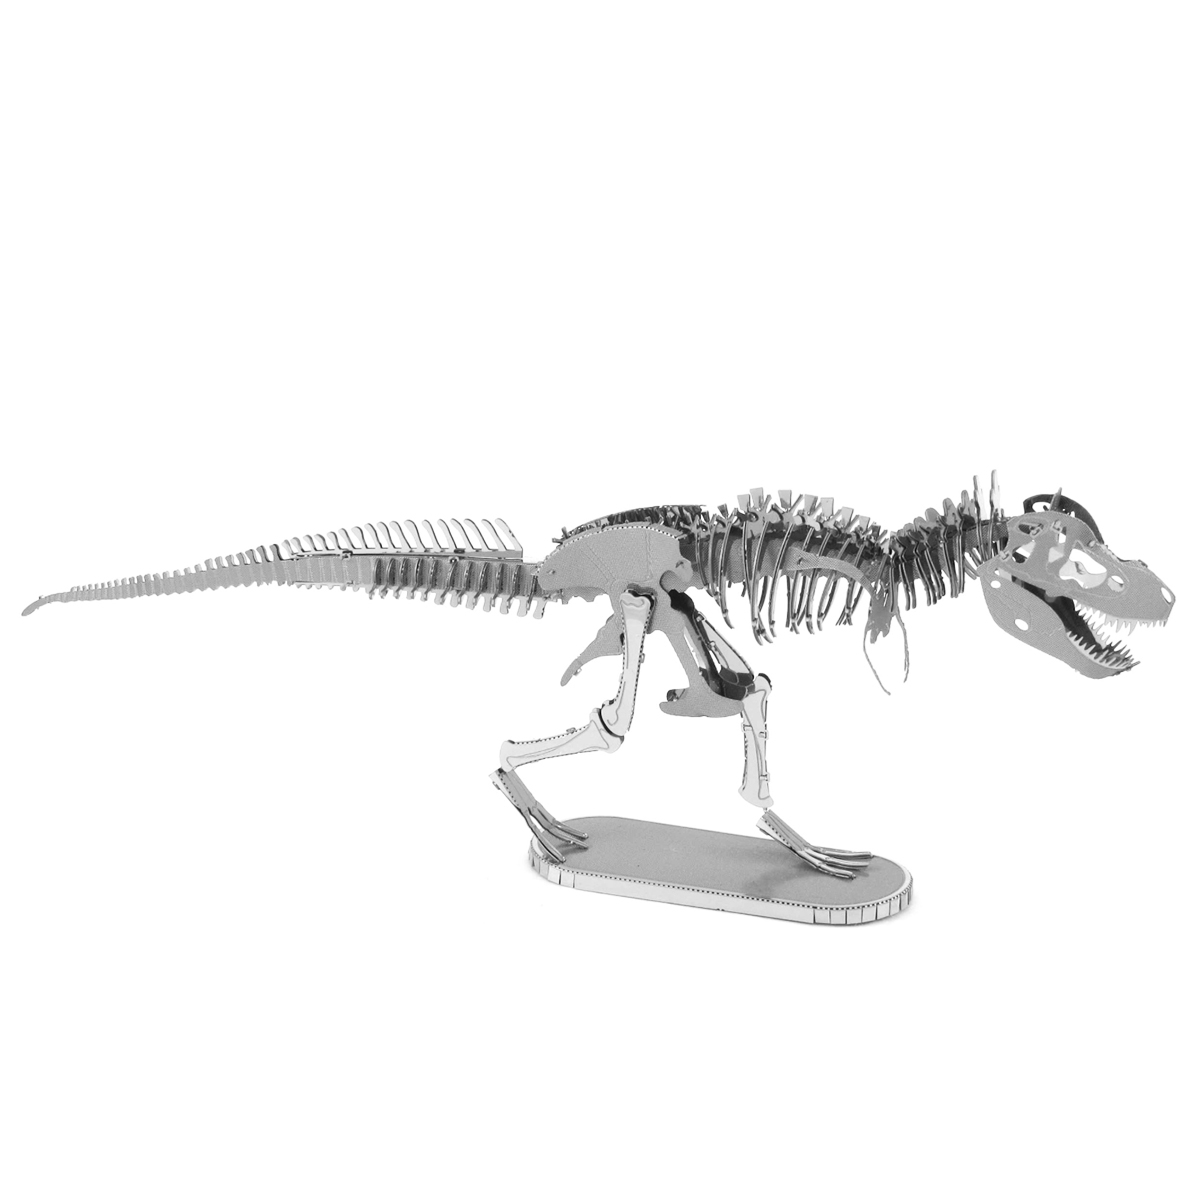 Fascinations T-REX Dinosaur Metal Earth 3D Model Kit MMS099 